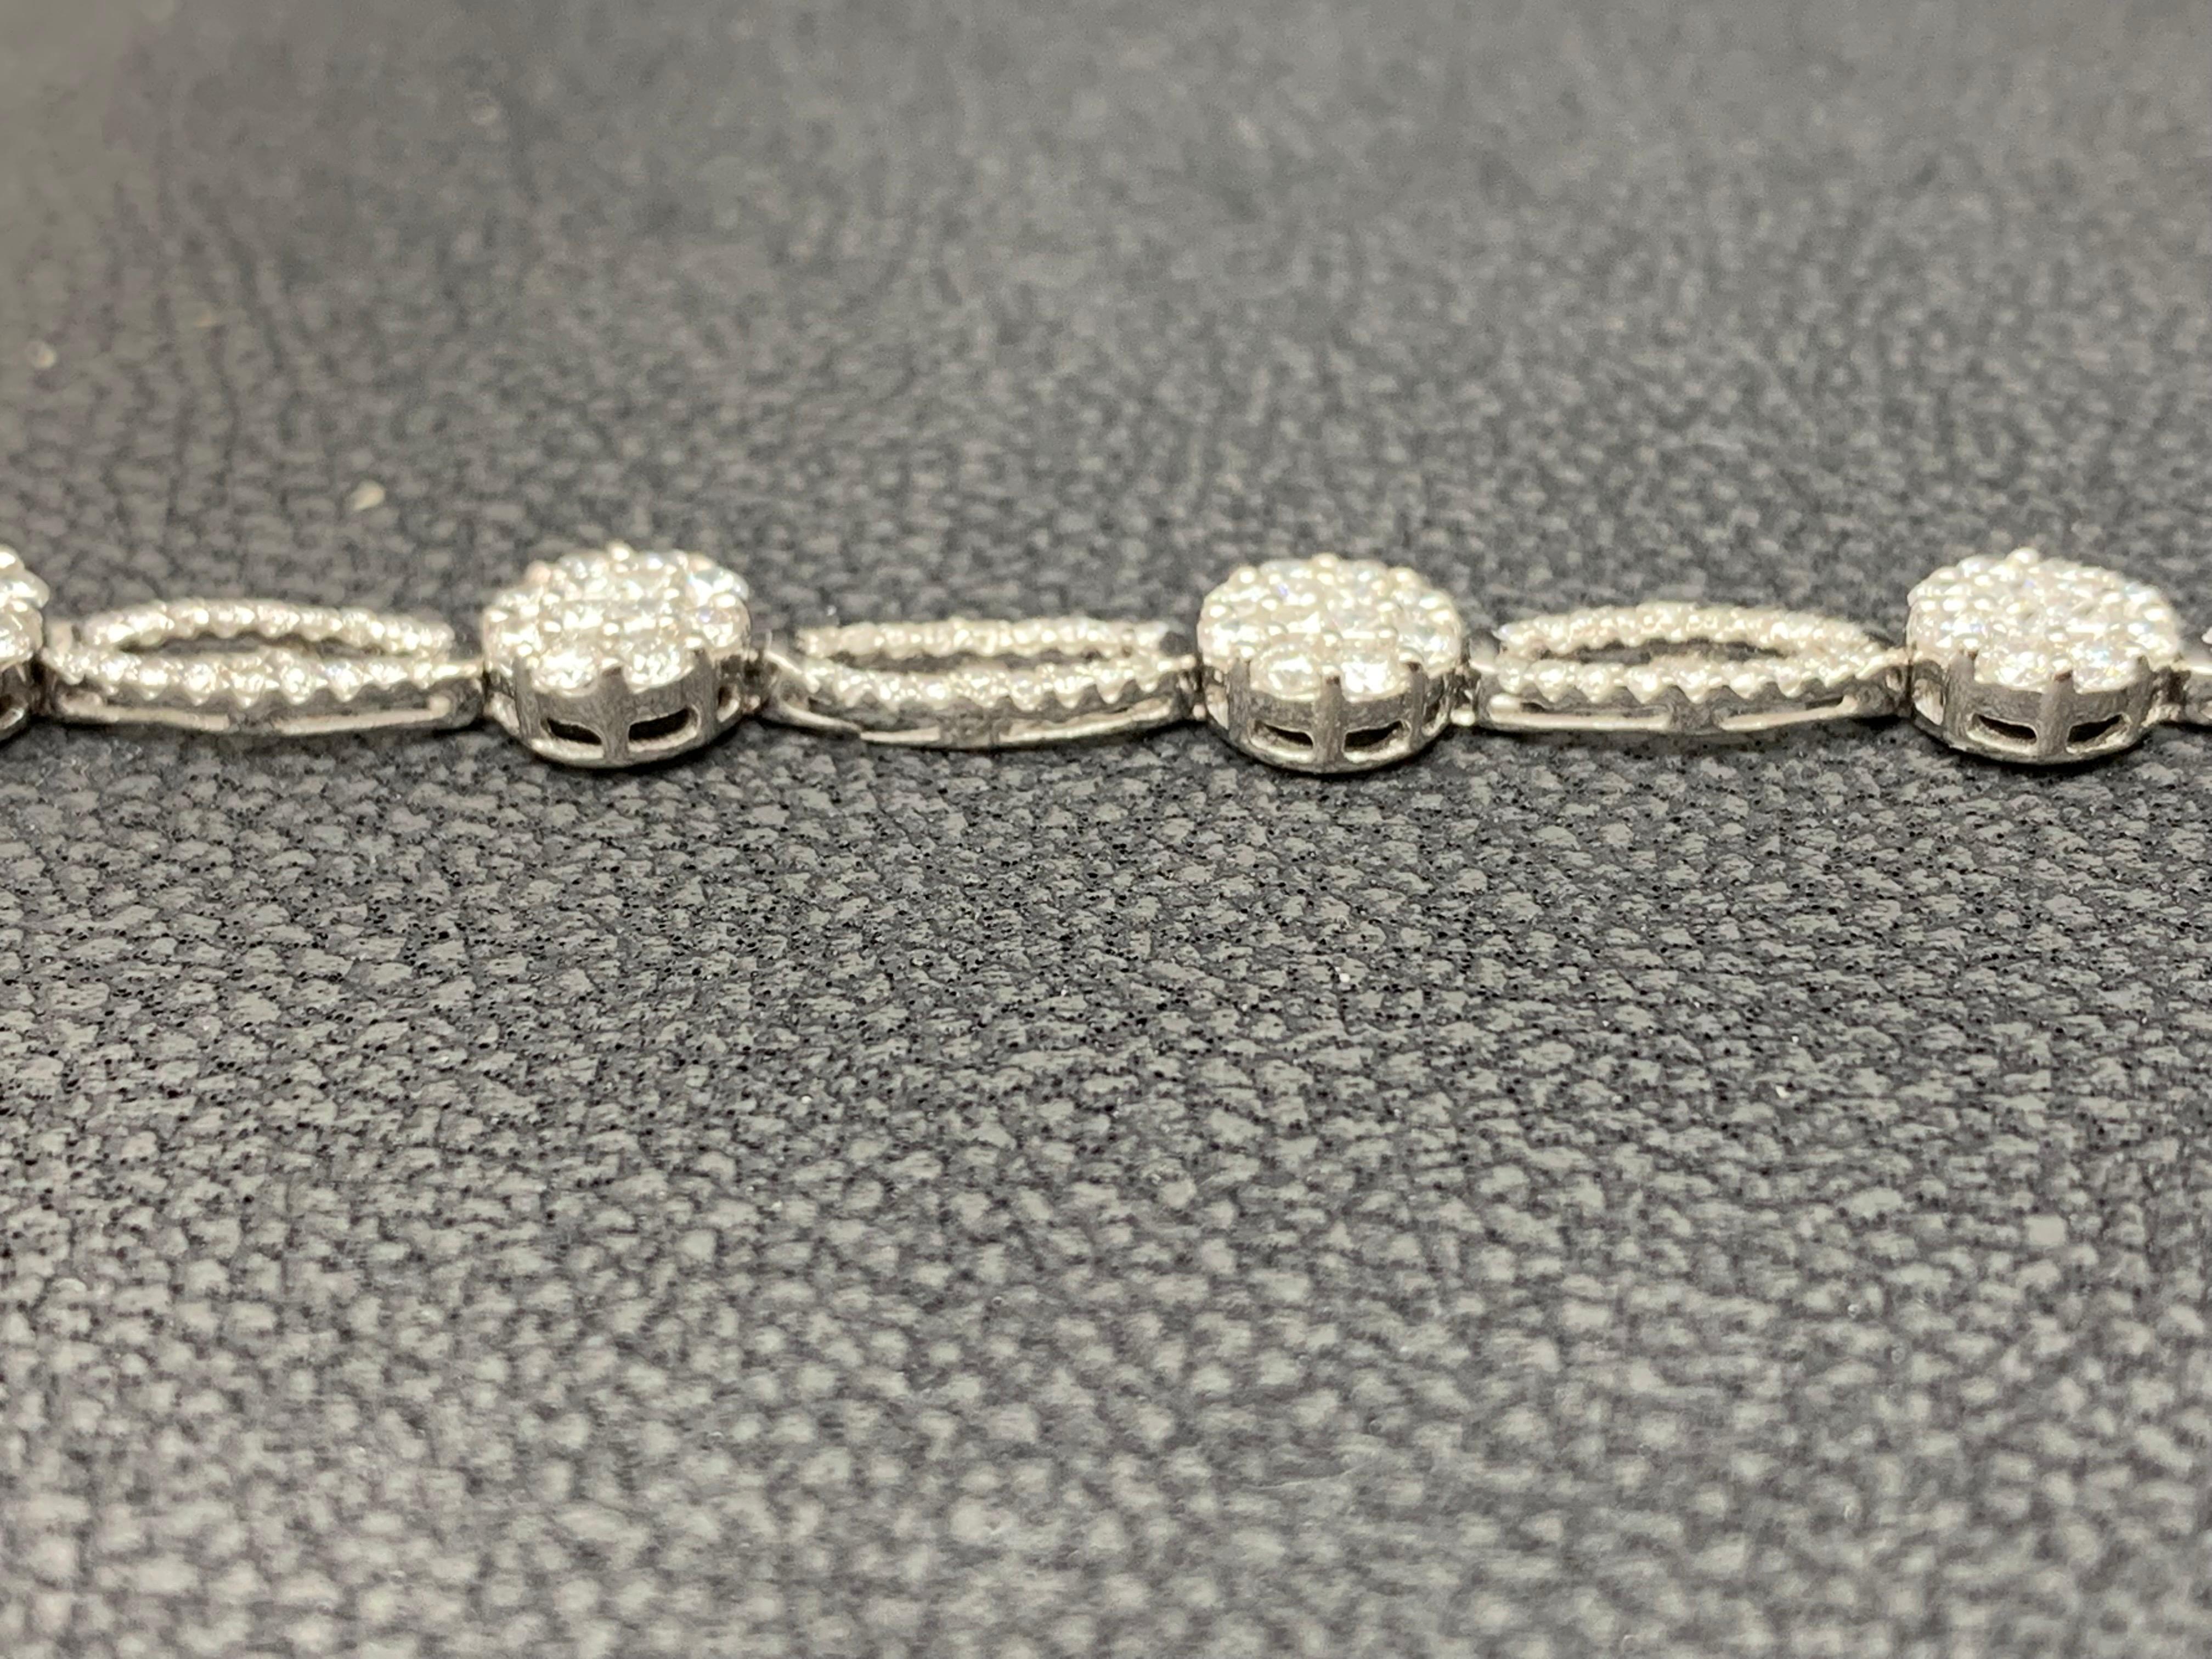 Open-Work 2.39 Carat Diamond Bracelet in 14K White Gold Art Deco Bracelet For Sale 4